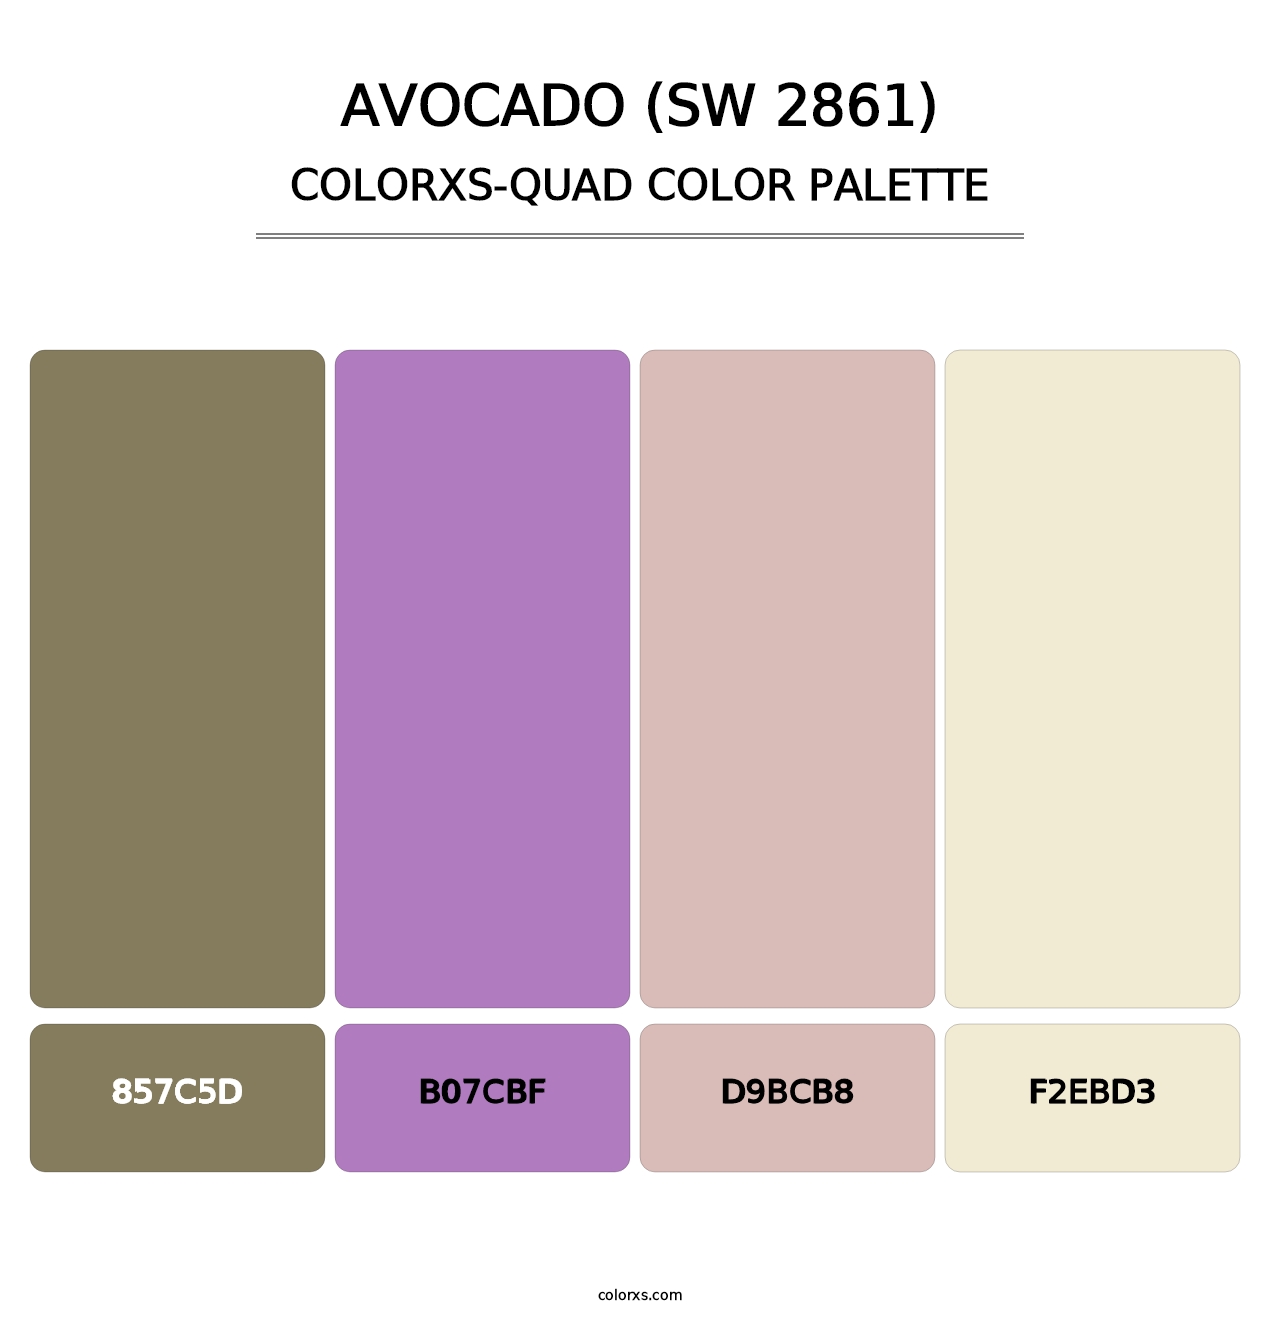 Avocado (SW 2861) - Colorxs Quad Palette